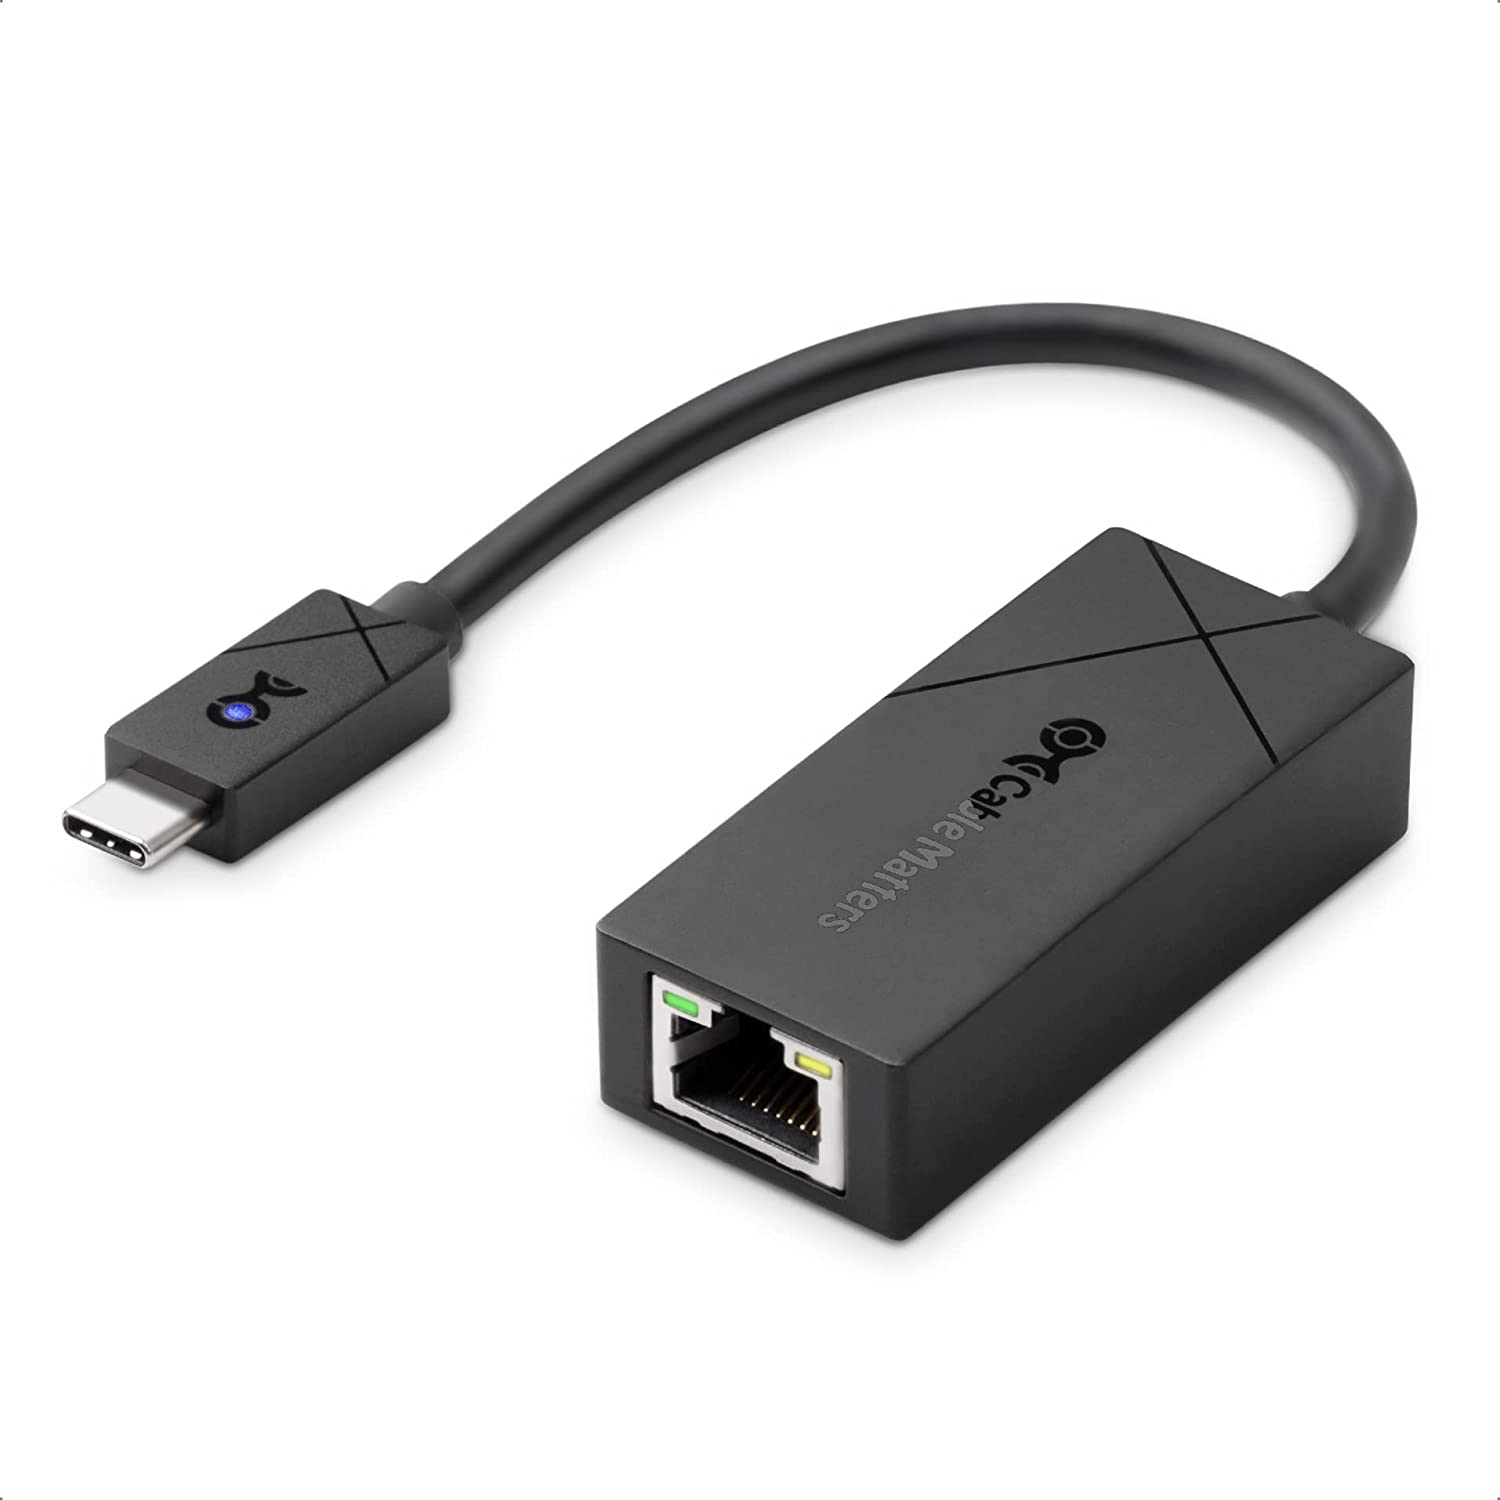 USB-C 2.5 Gigabit Ethernet Adapter